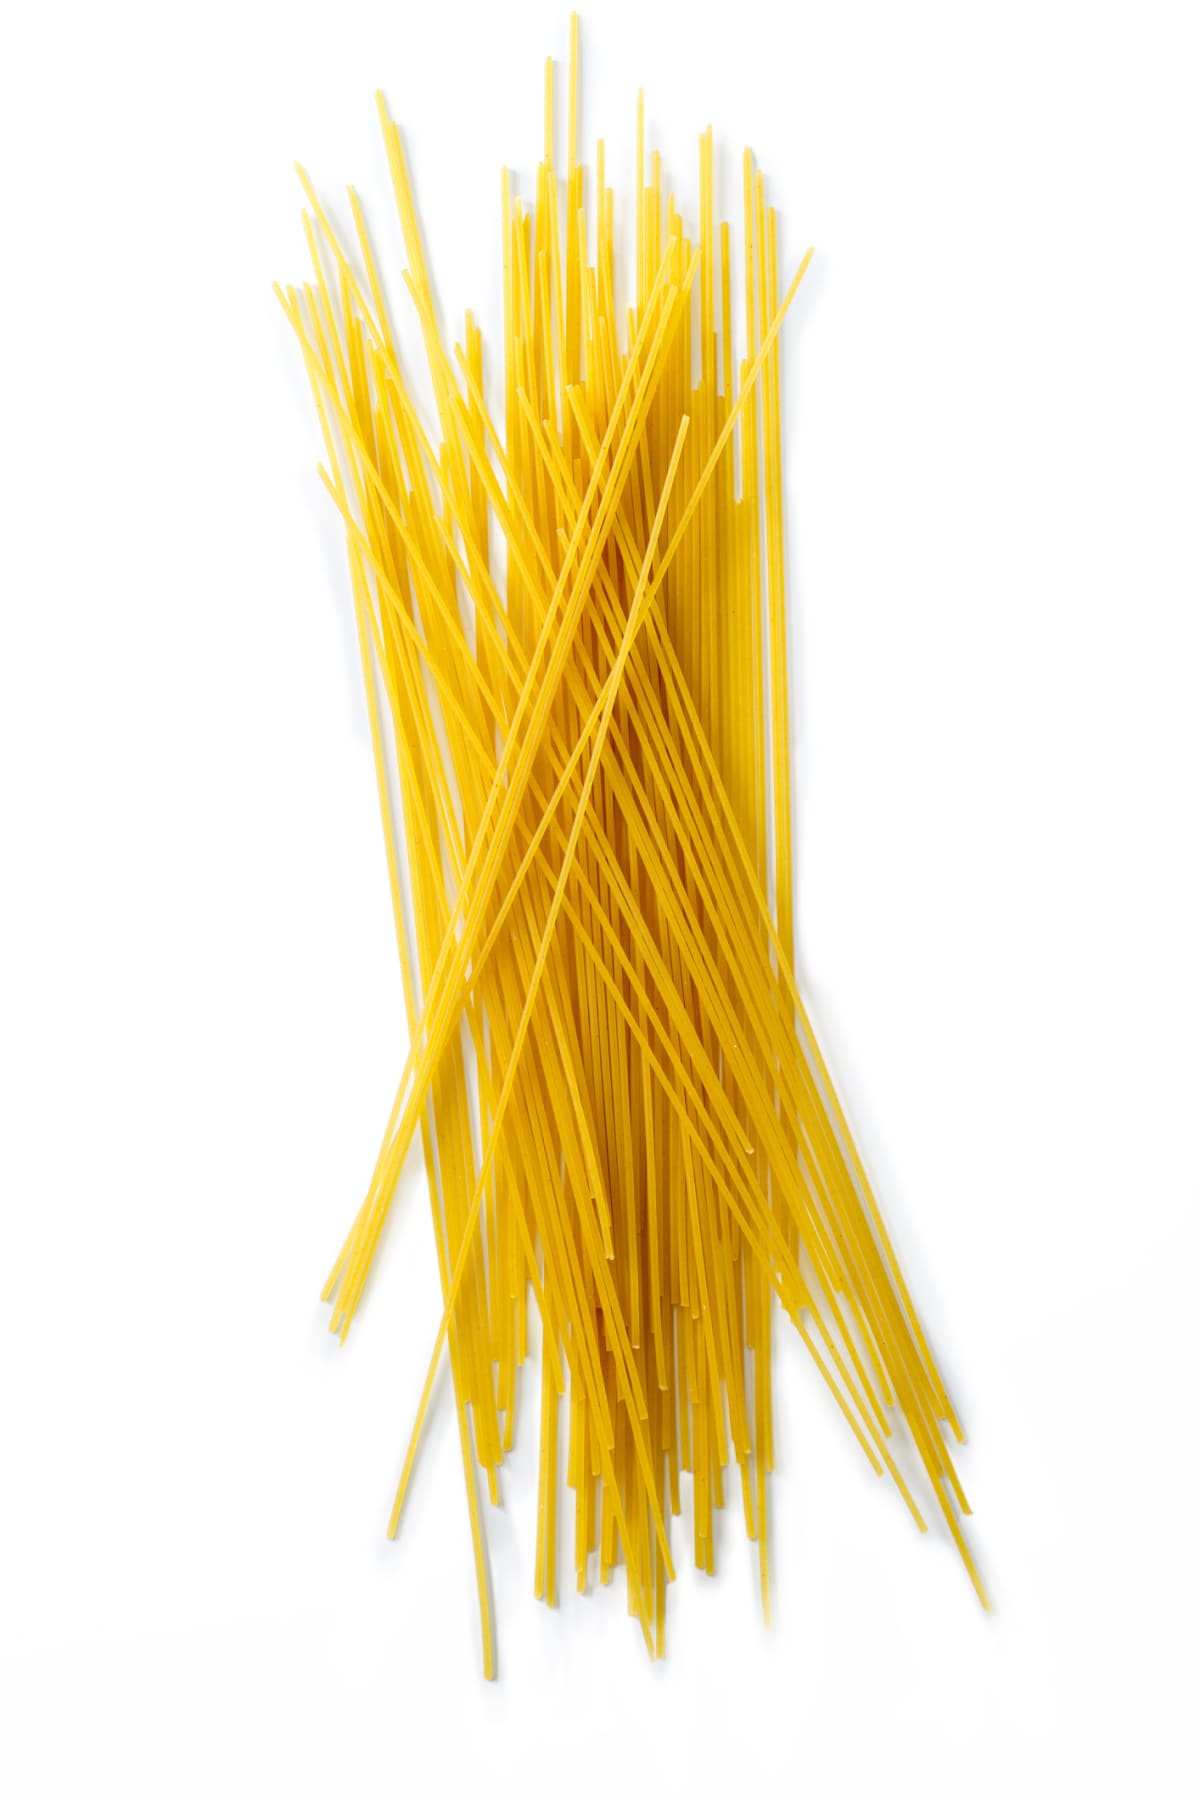 Uncooked spaghetti isolated on white background